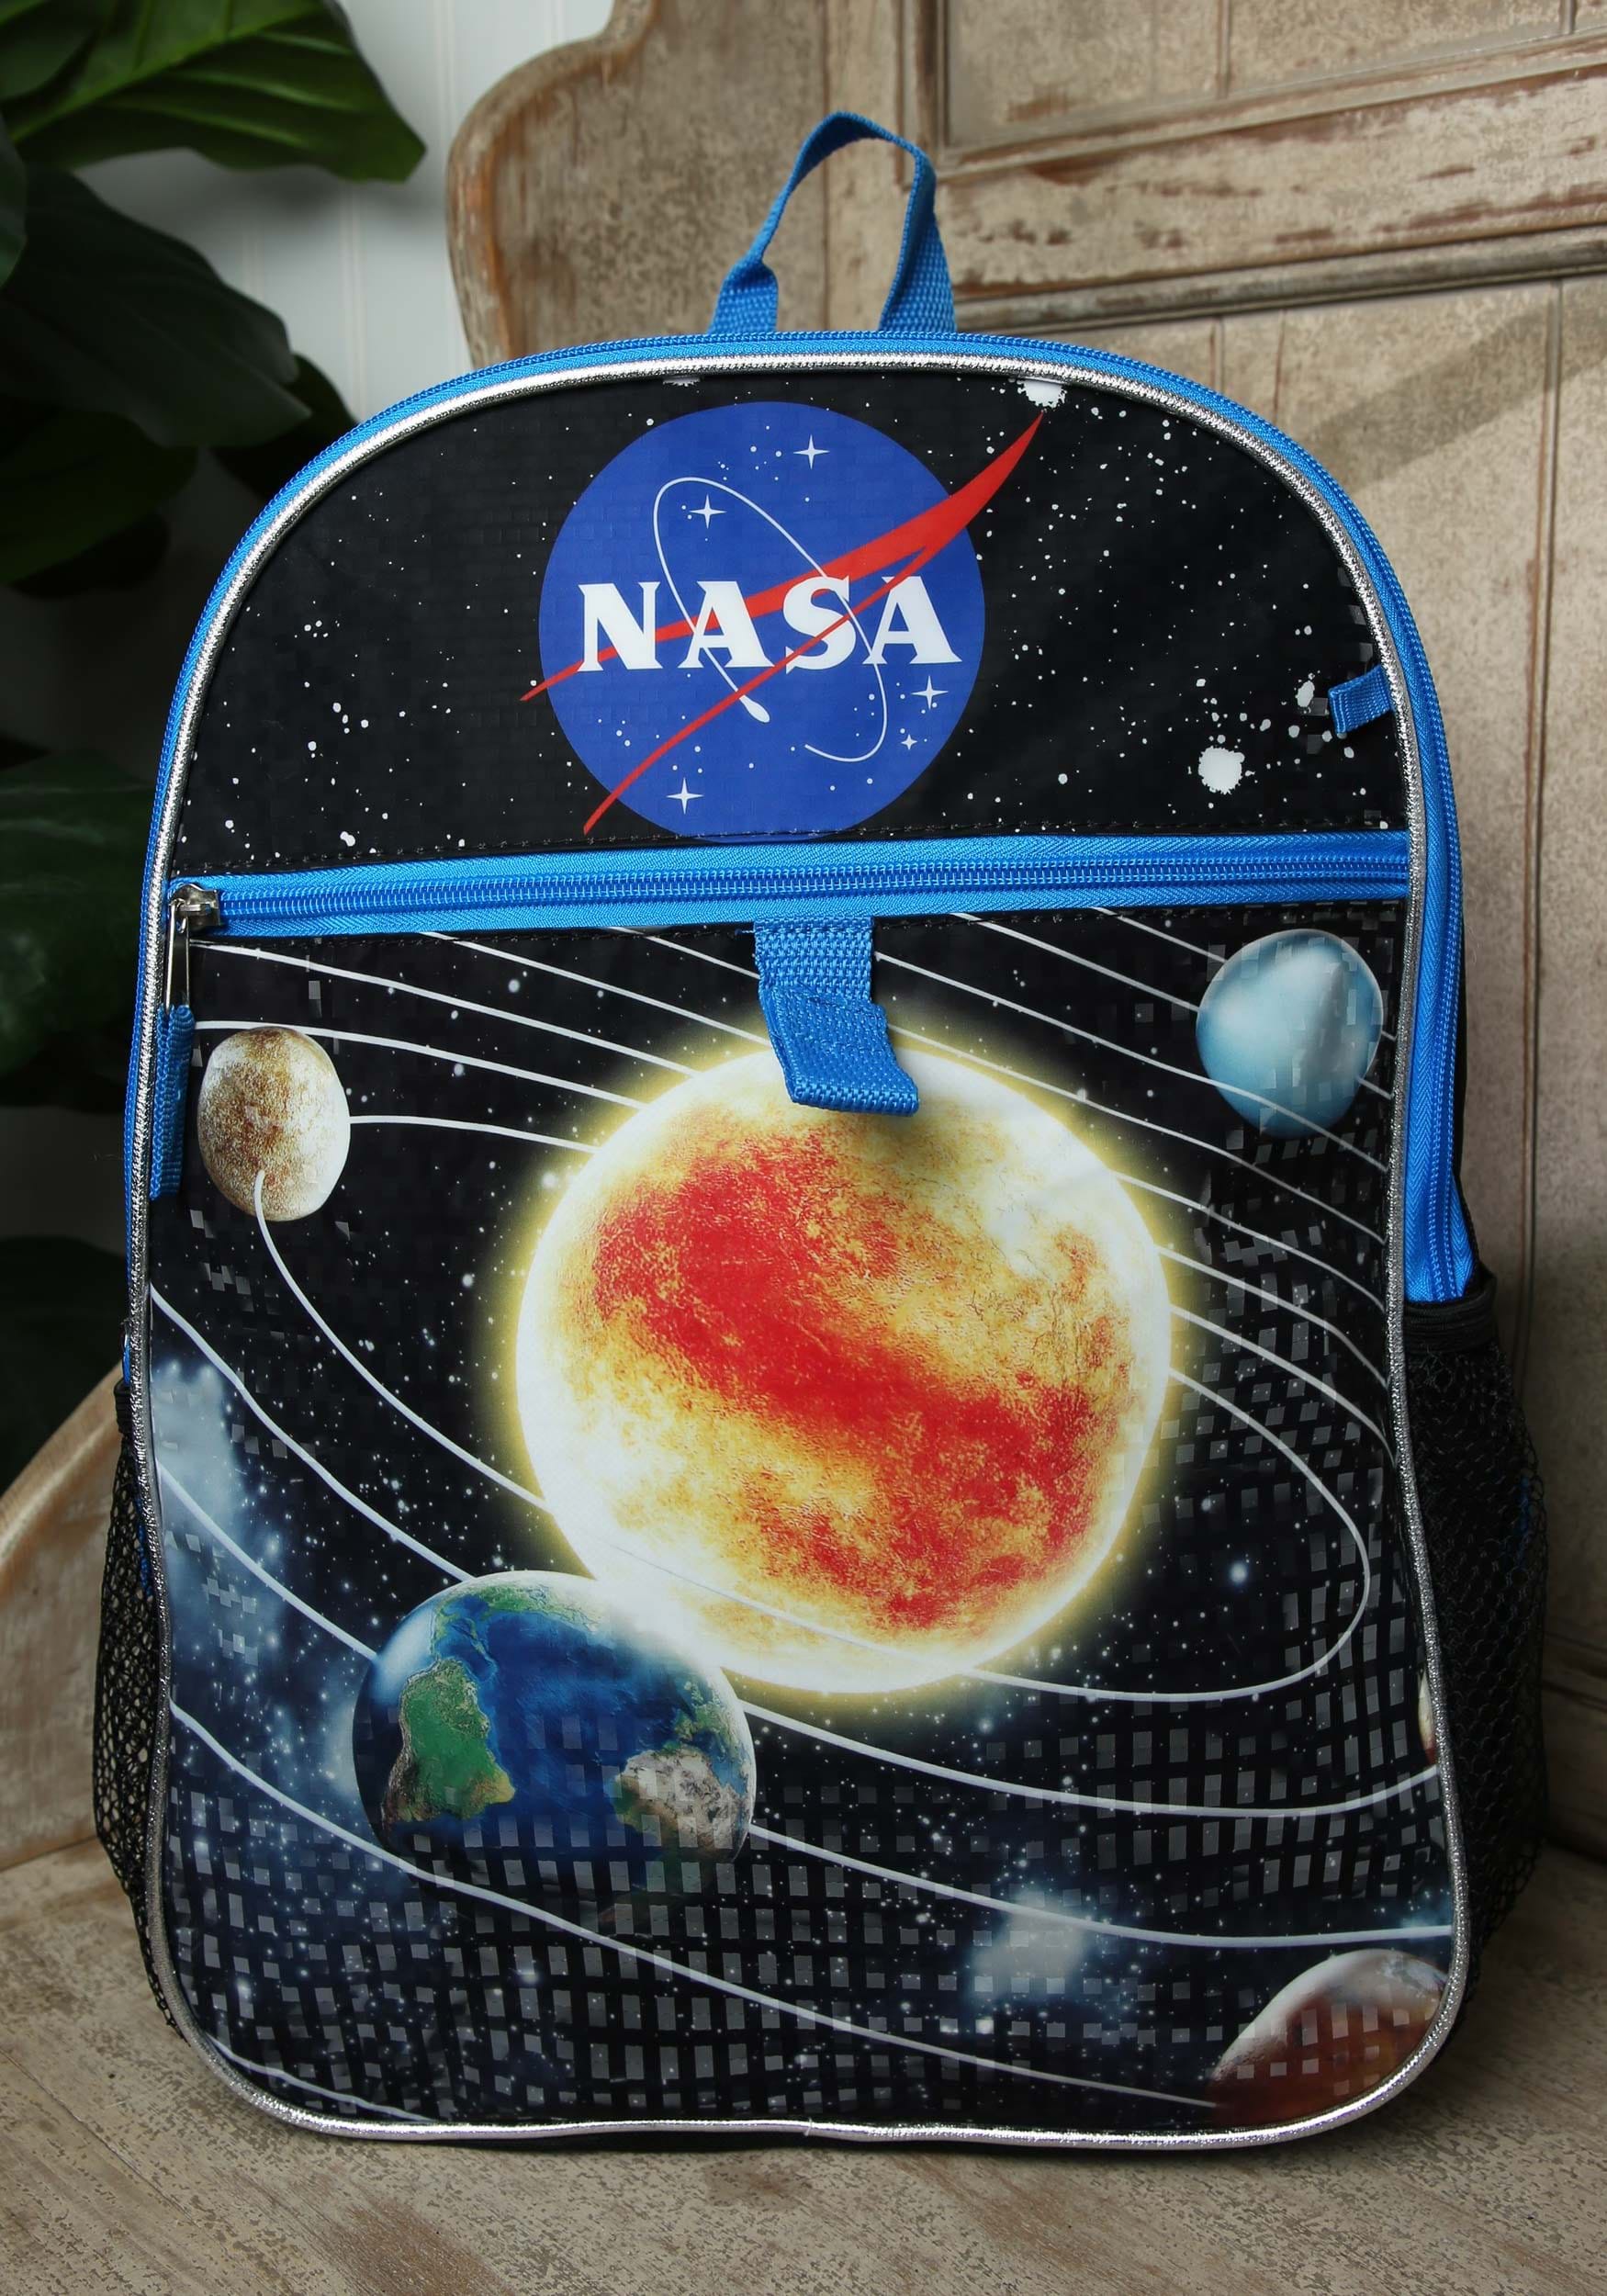 Rainbow High 5-Piece Backpack & Lunch Bag Set